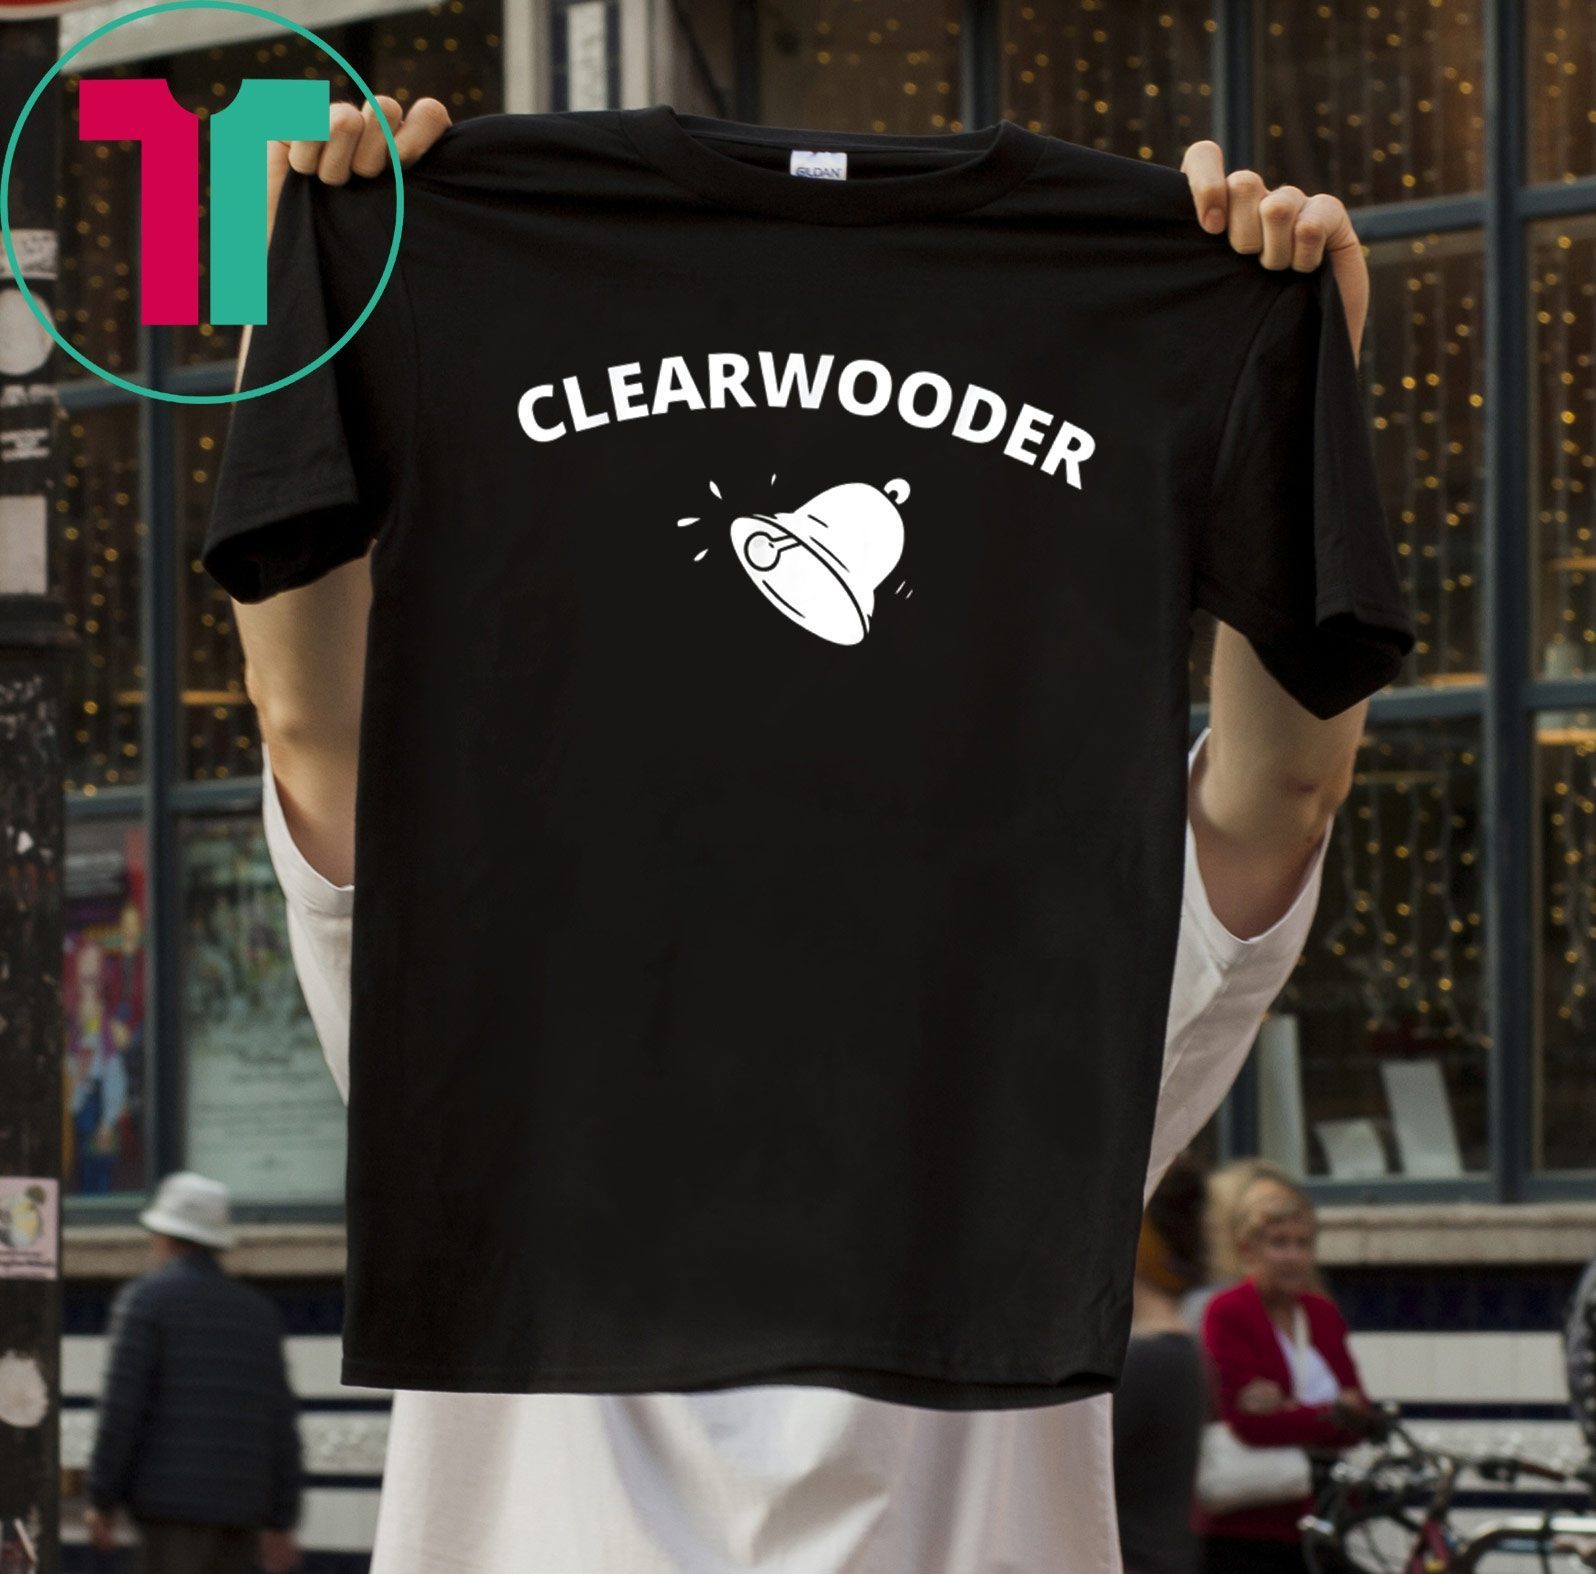 Clearwooder Shirts Phillies Shirts Bryce Harper Shirts 